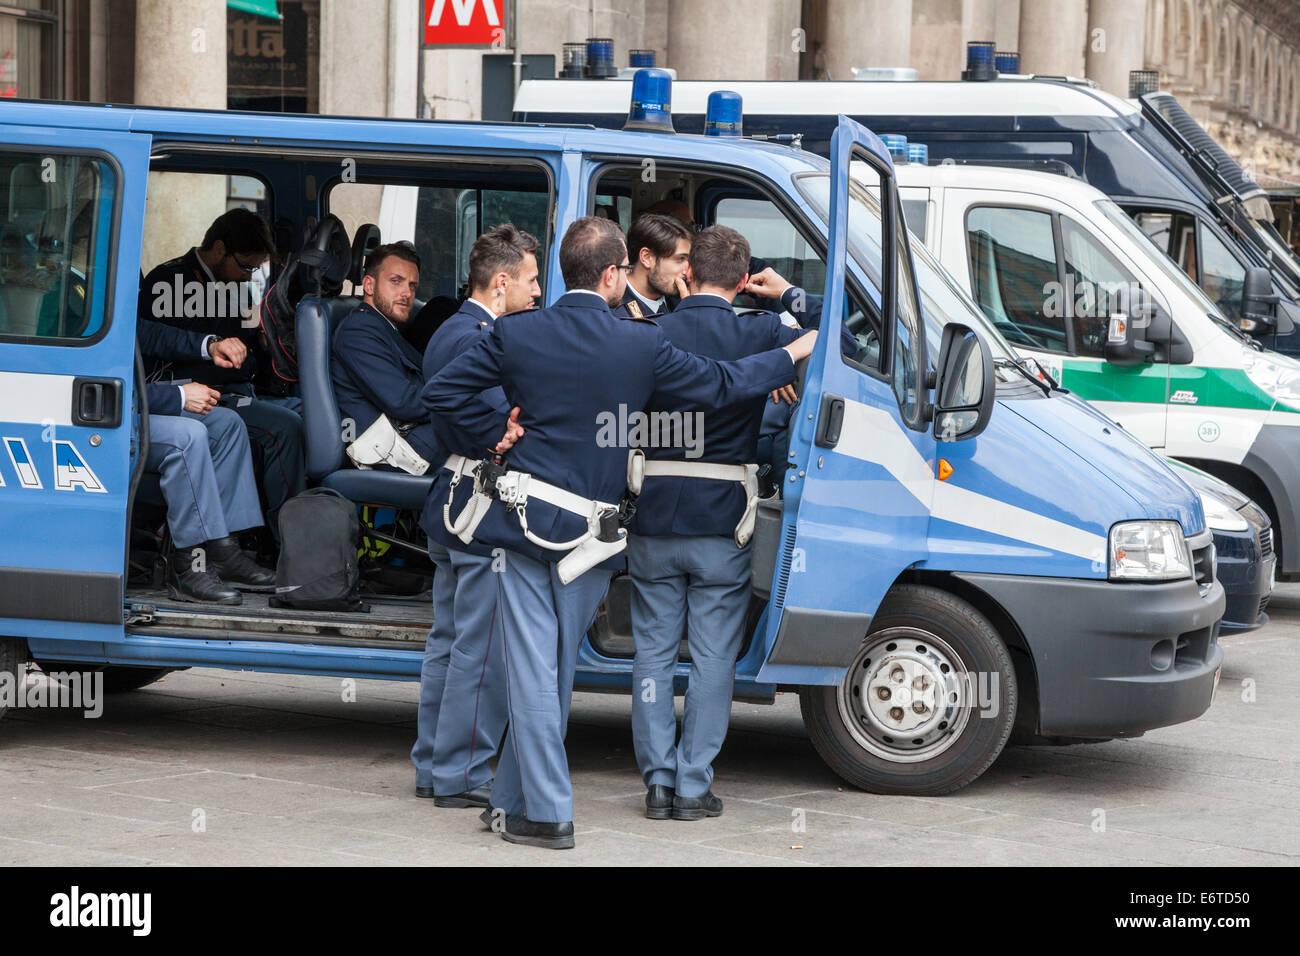 Group of Polizia Italian Policemen around a police van in Piazza Duomo, Milan, Italy Stock Photo